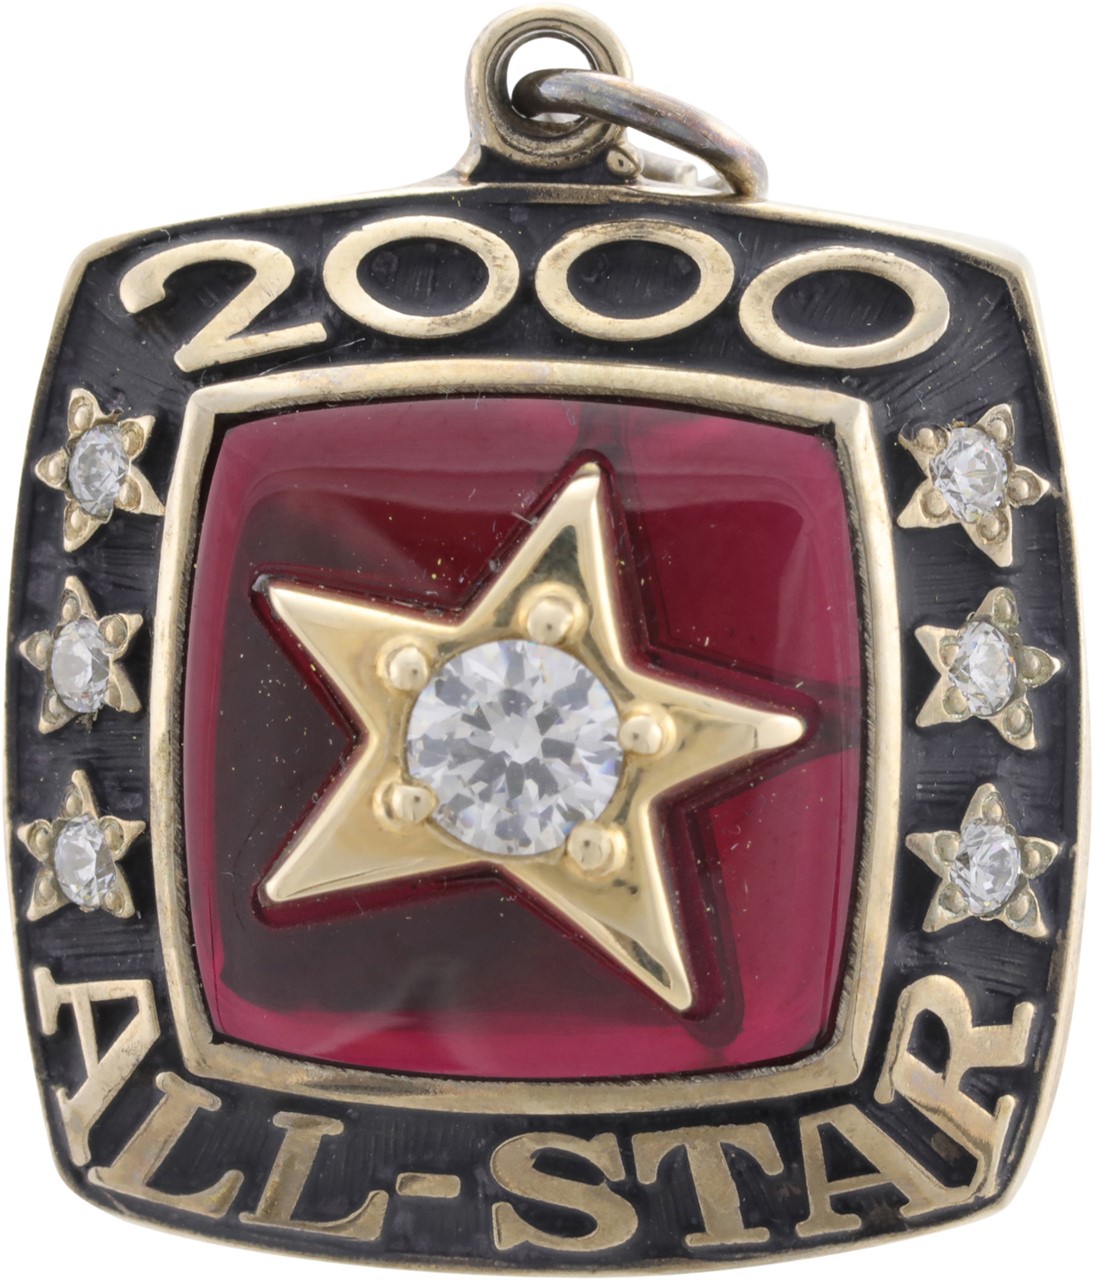 2000 MLB All-Star Game Charm